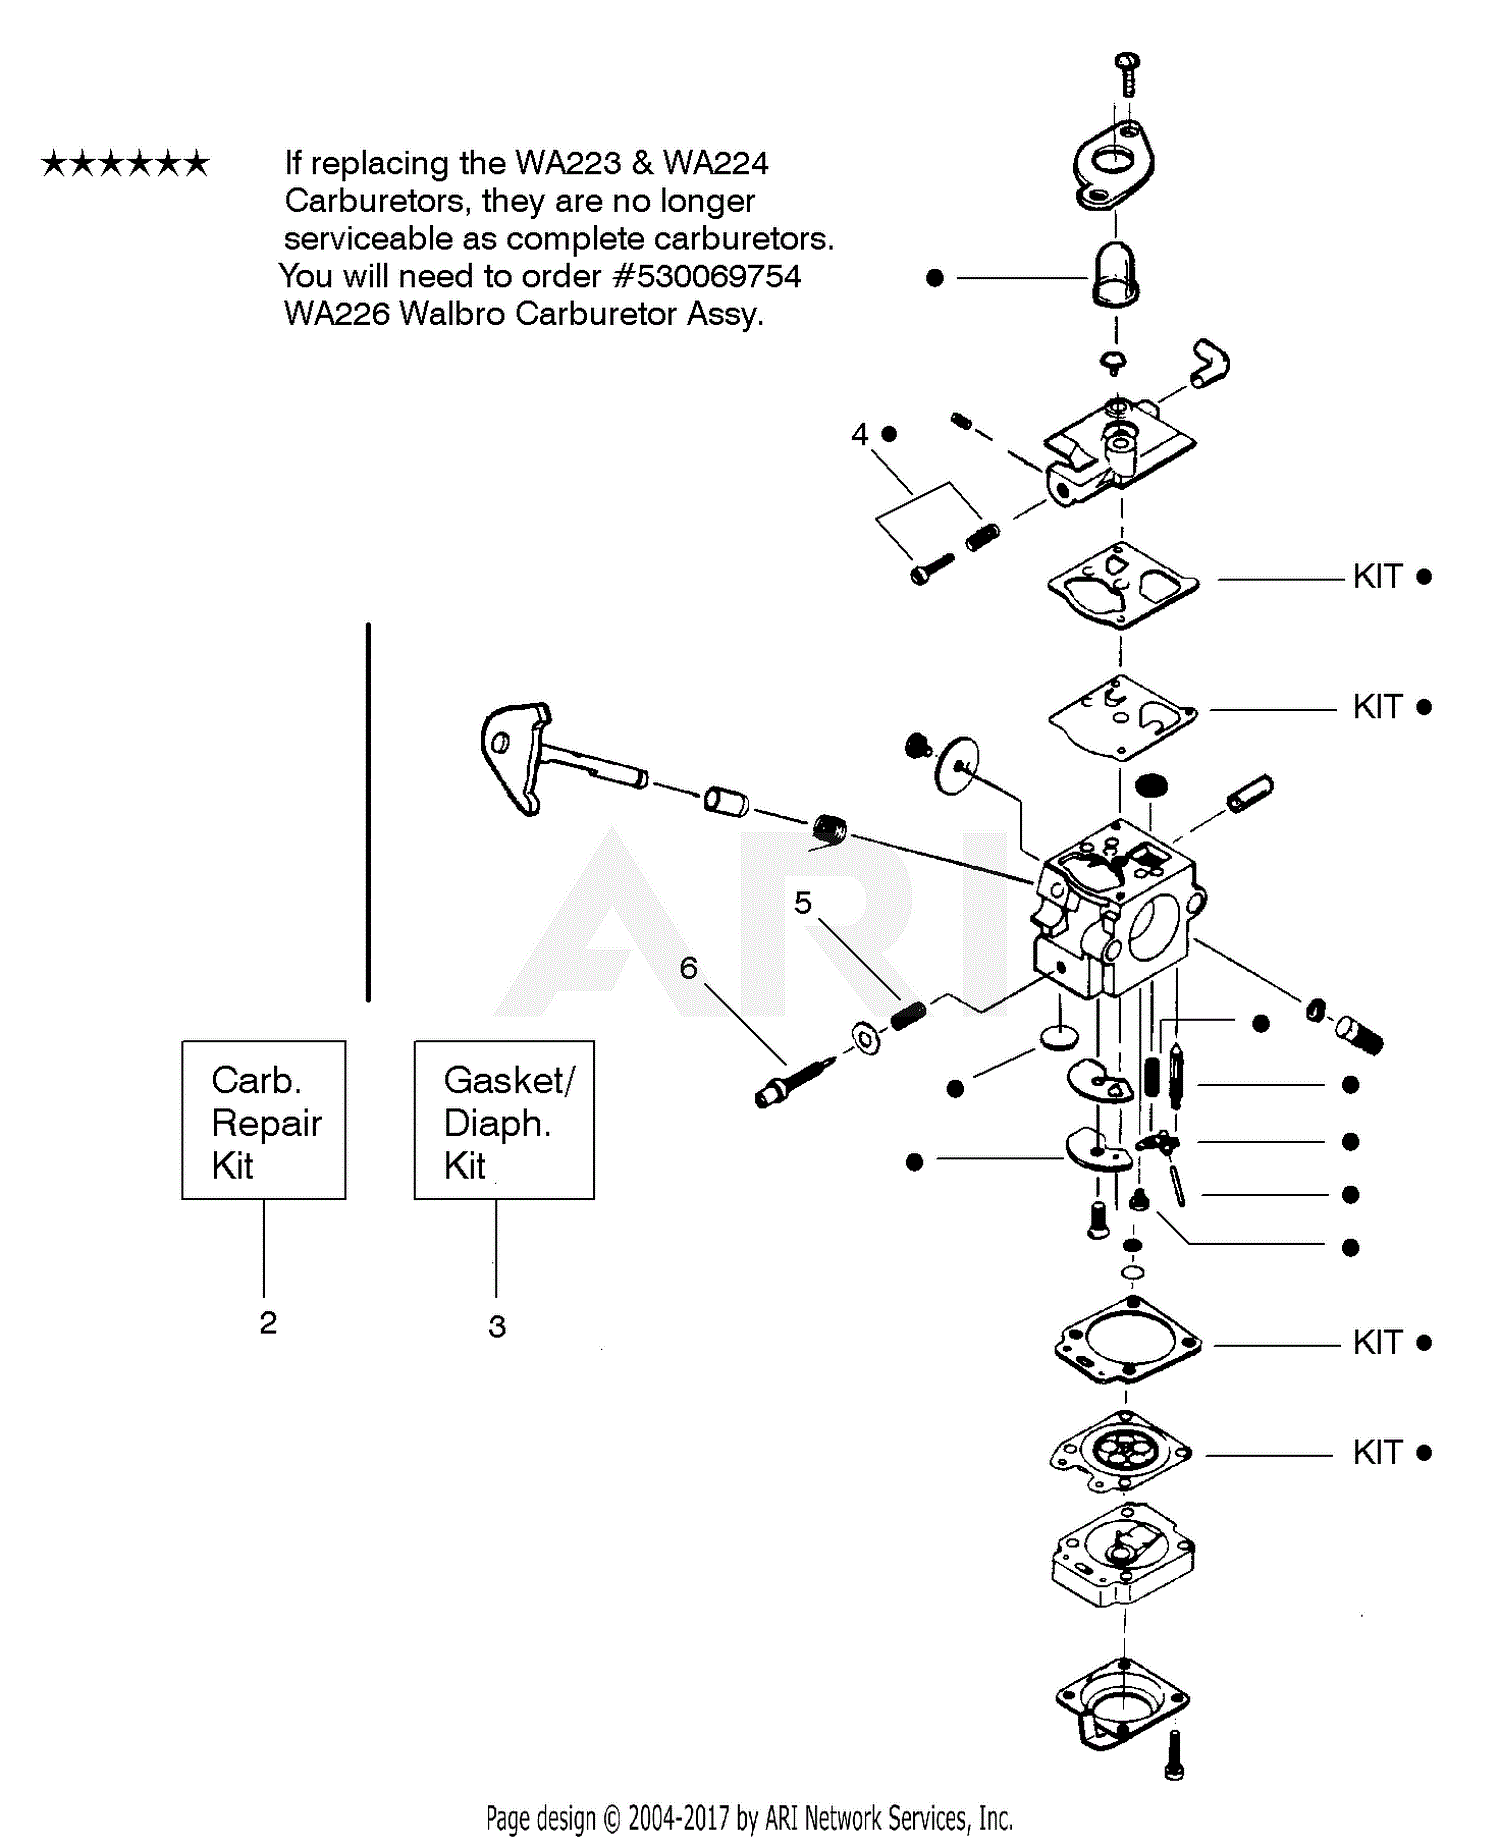 https://az417944.vo.msecnd.net/diagrams/manufacturer/poulan/weed-eater/featherlite-gas-trimmer-type-1/carburetor-assembly-zama-c1u-w7-p-n-530069971/diagram.gif